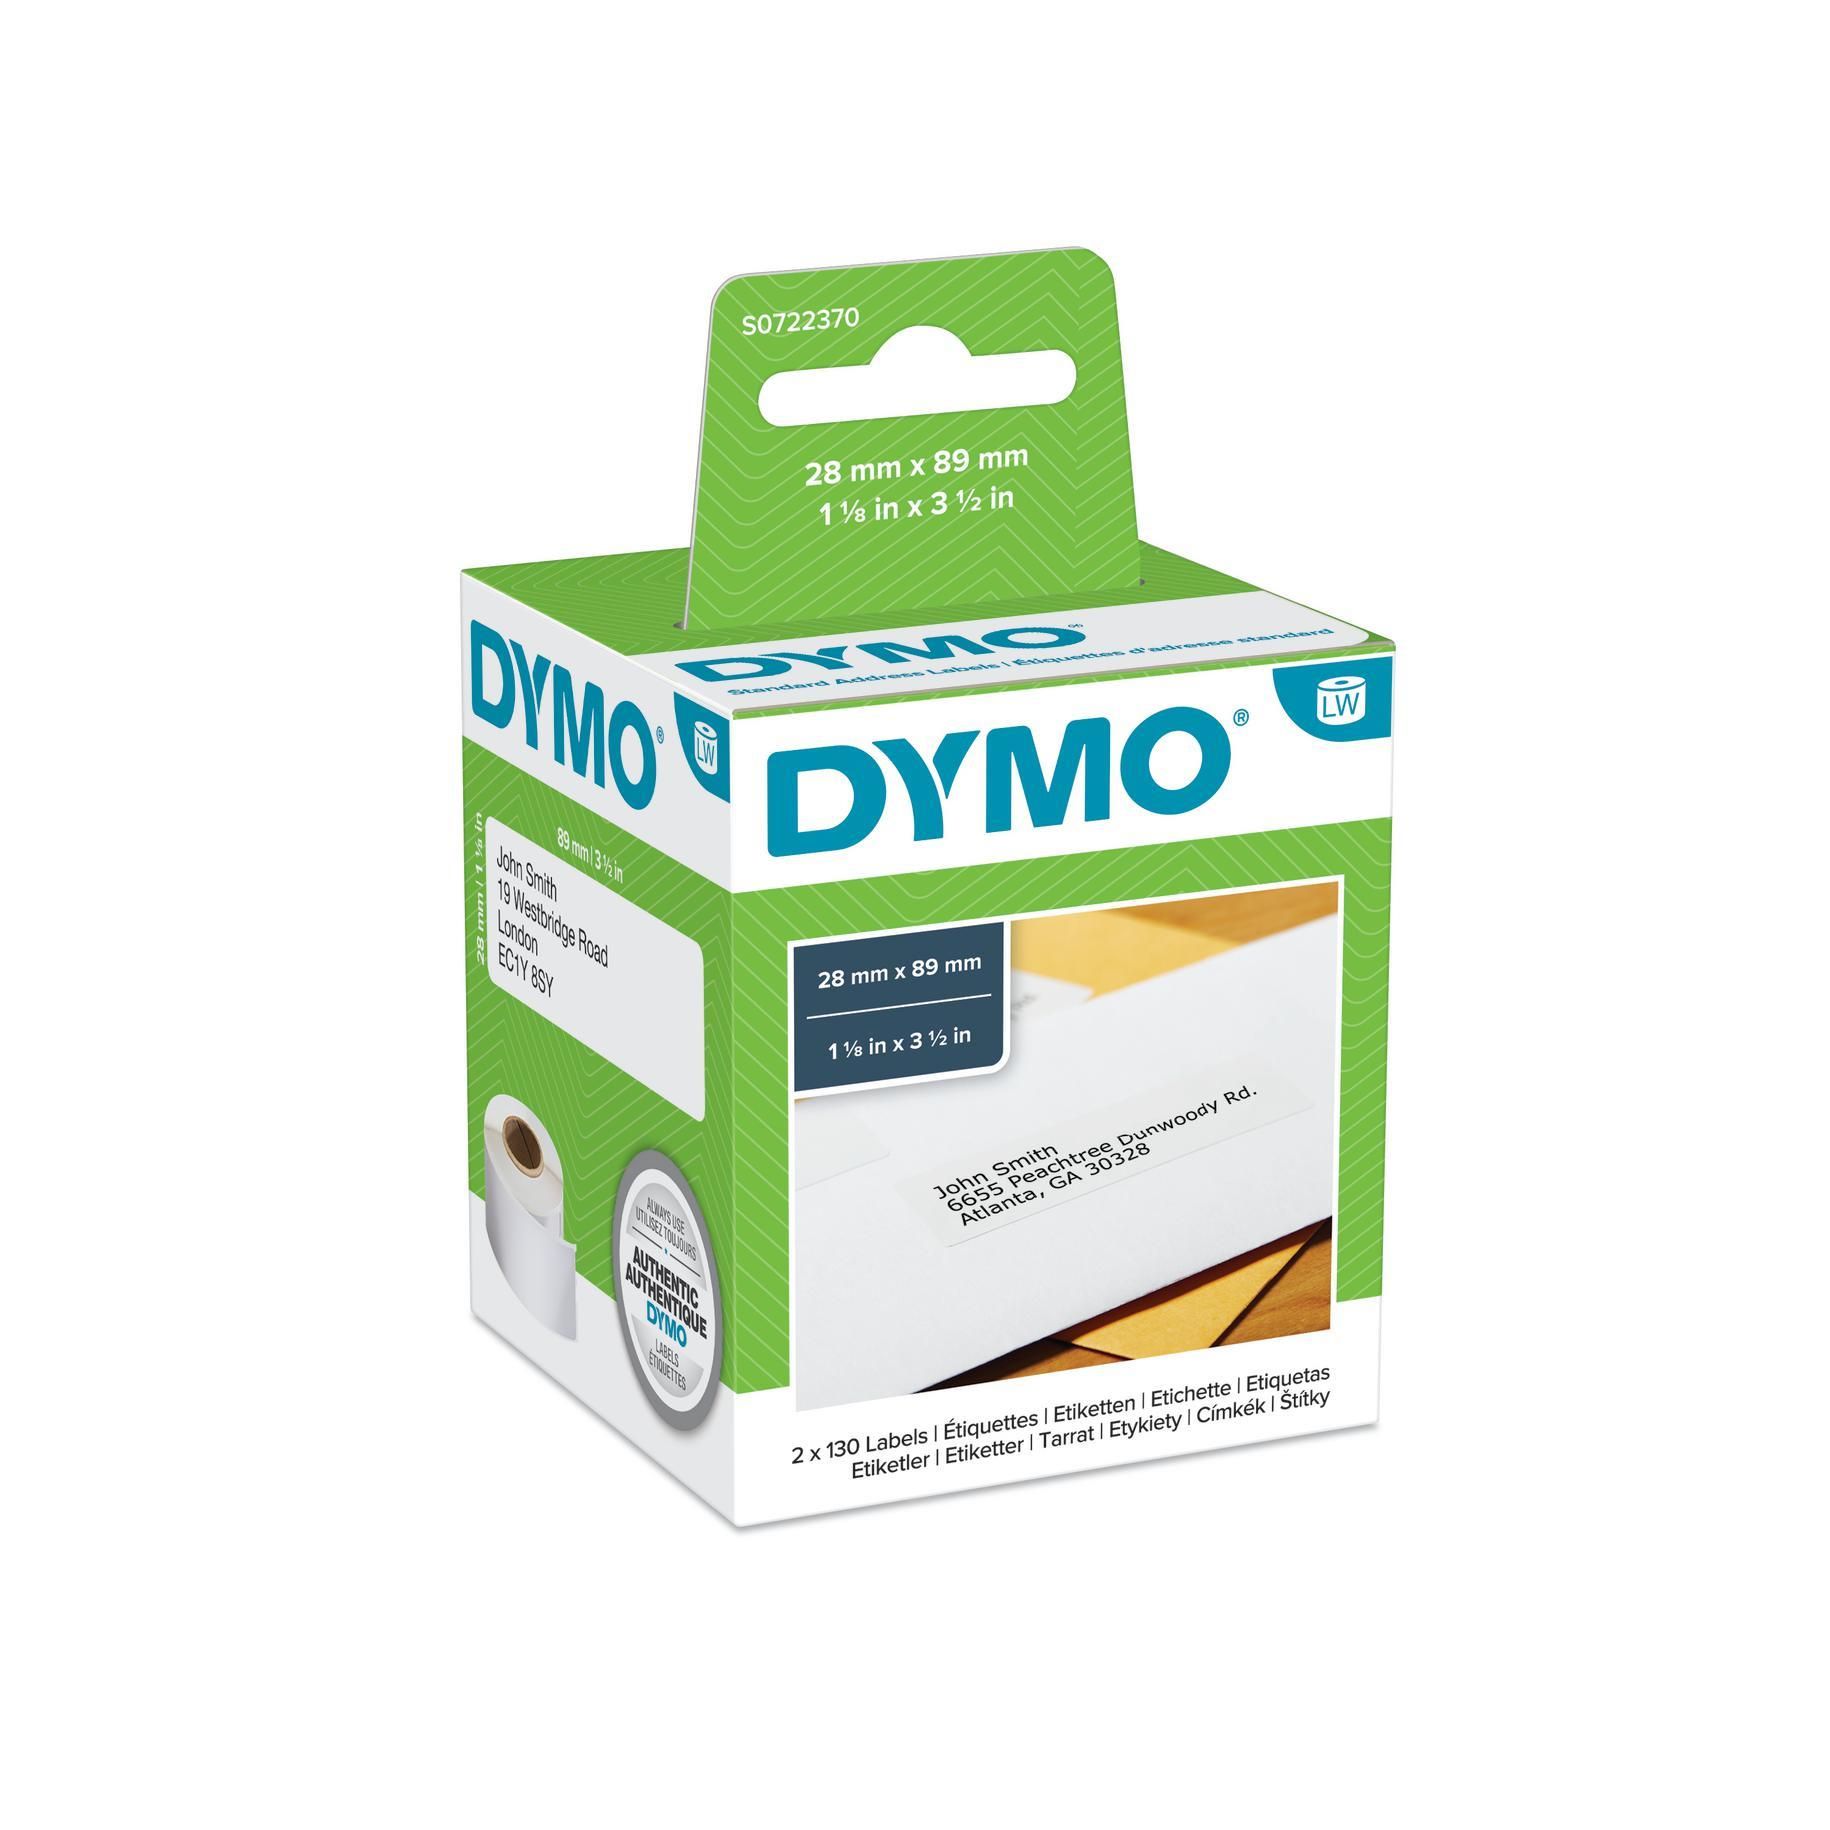 Dymo Cf2x130 Etichette Labelwriter